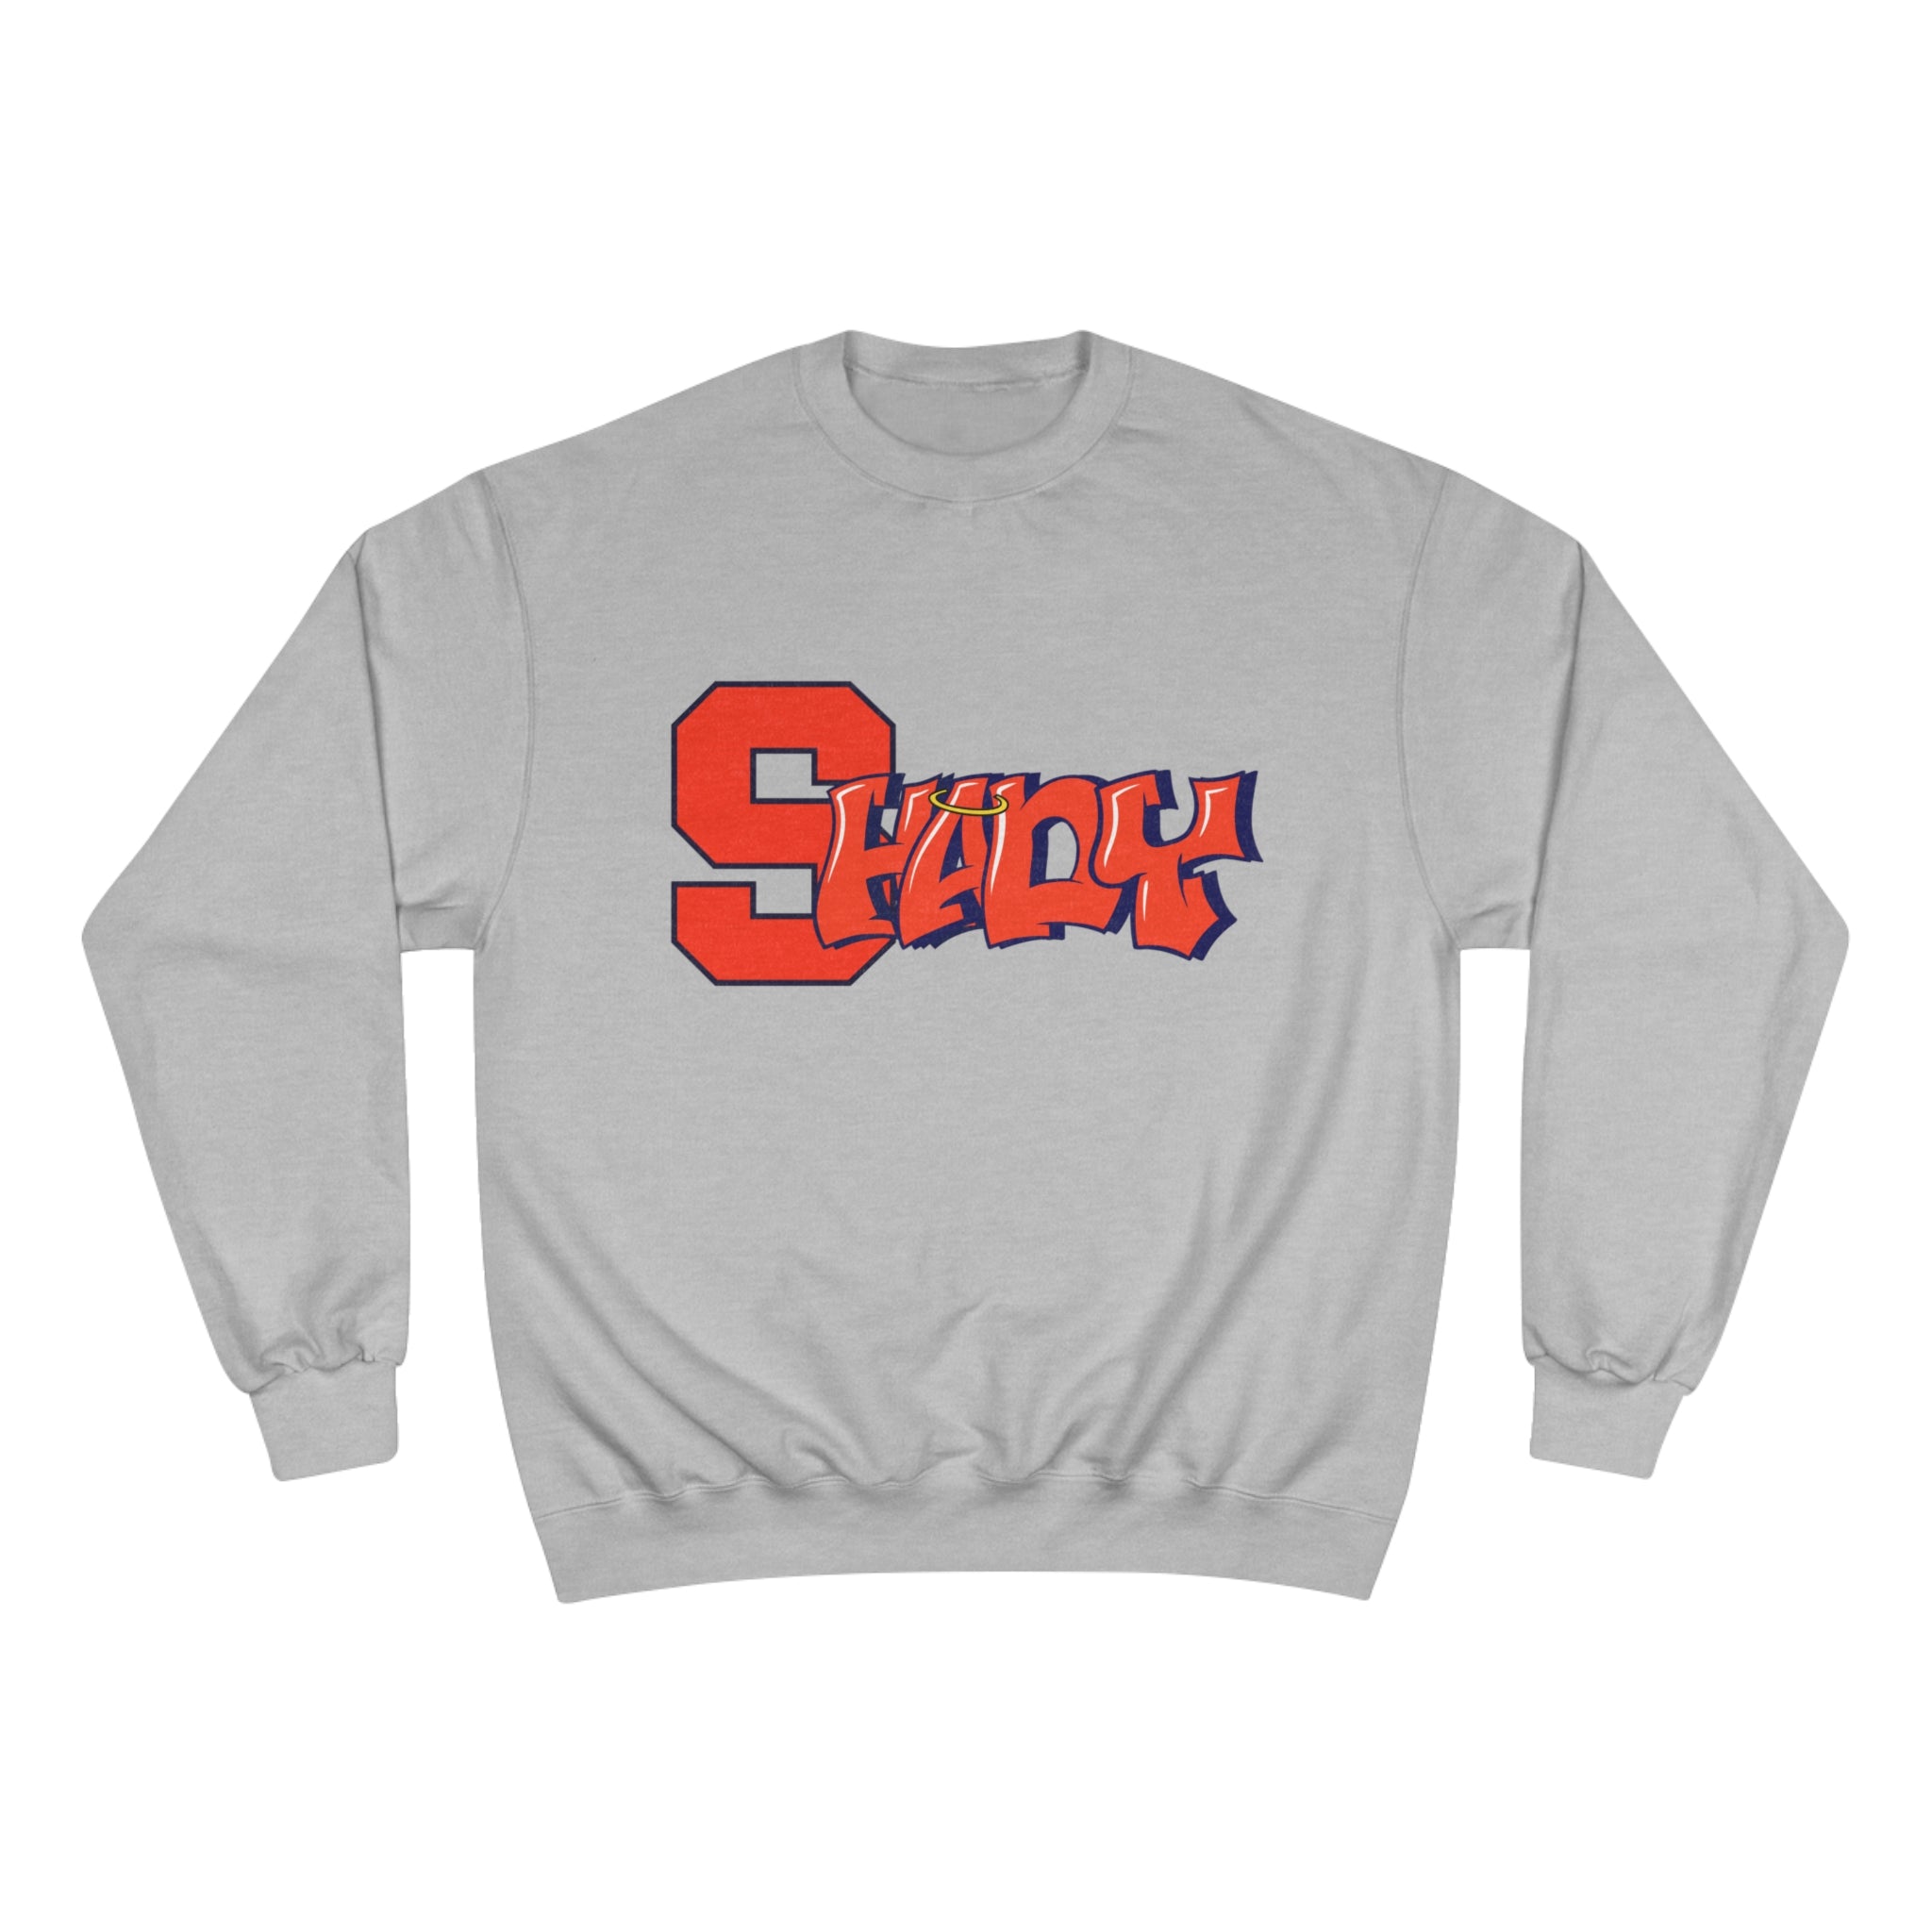 FURDreams ”NYC” XVI Champion Sweatshirt